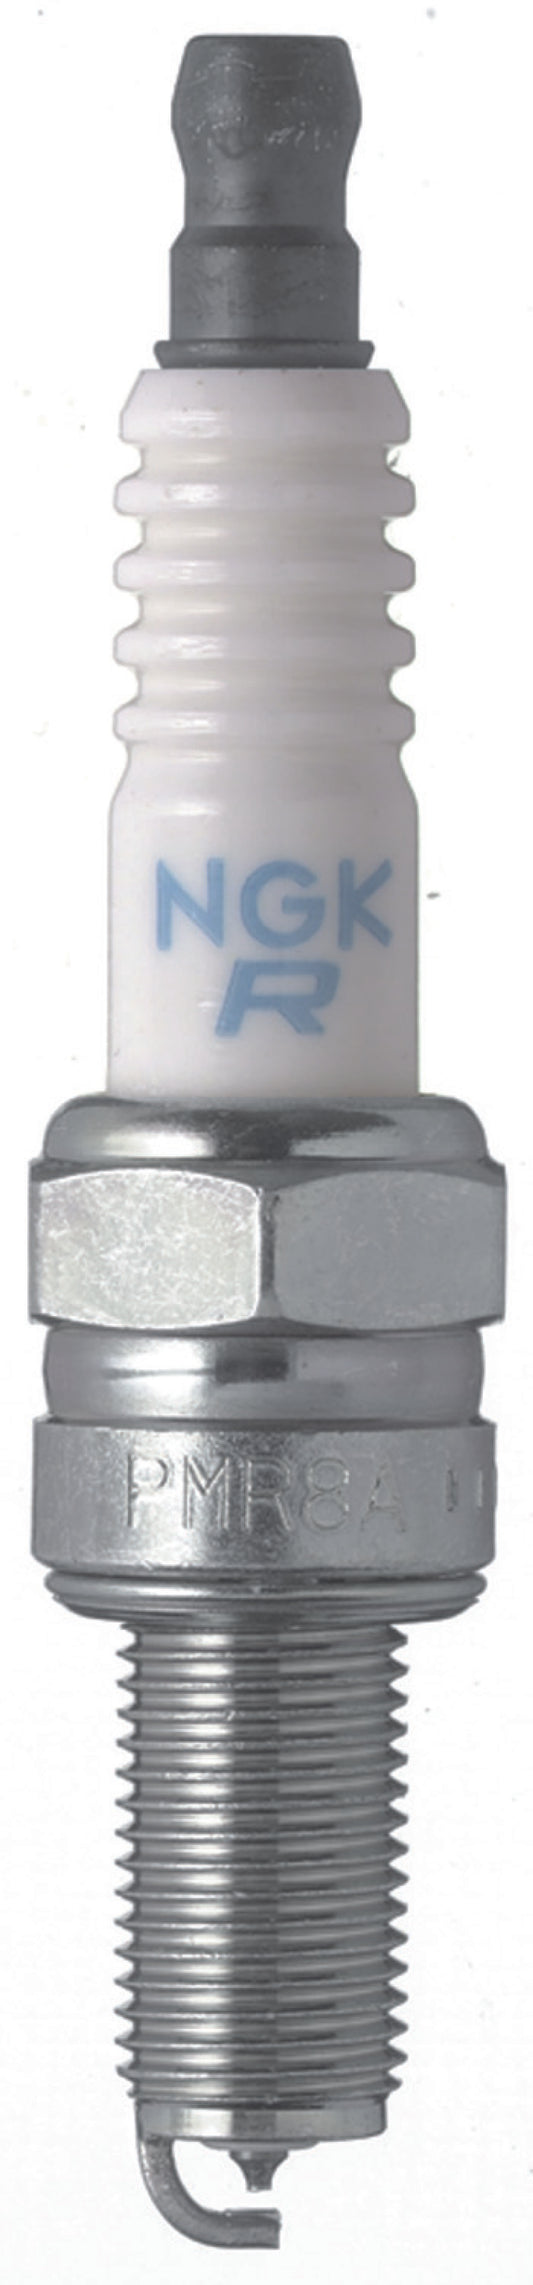 NGK Nickel Spark Plug Box of 4 (CR9EB)